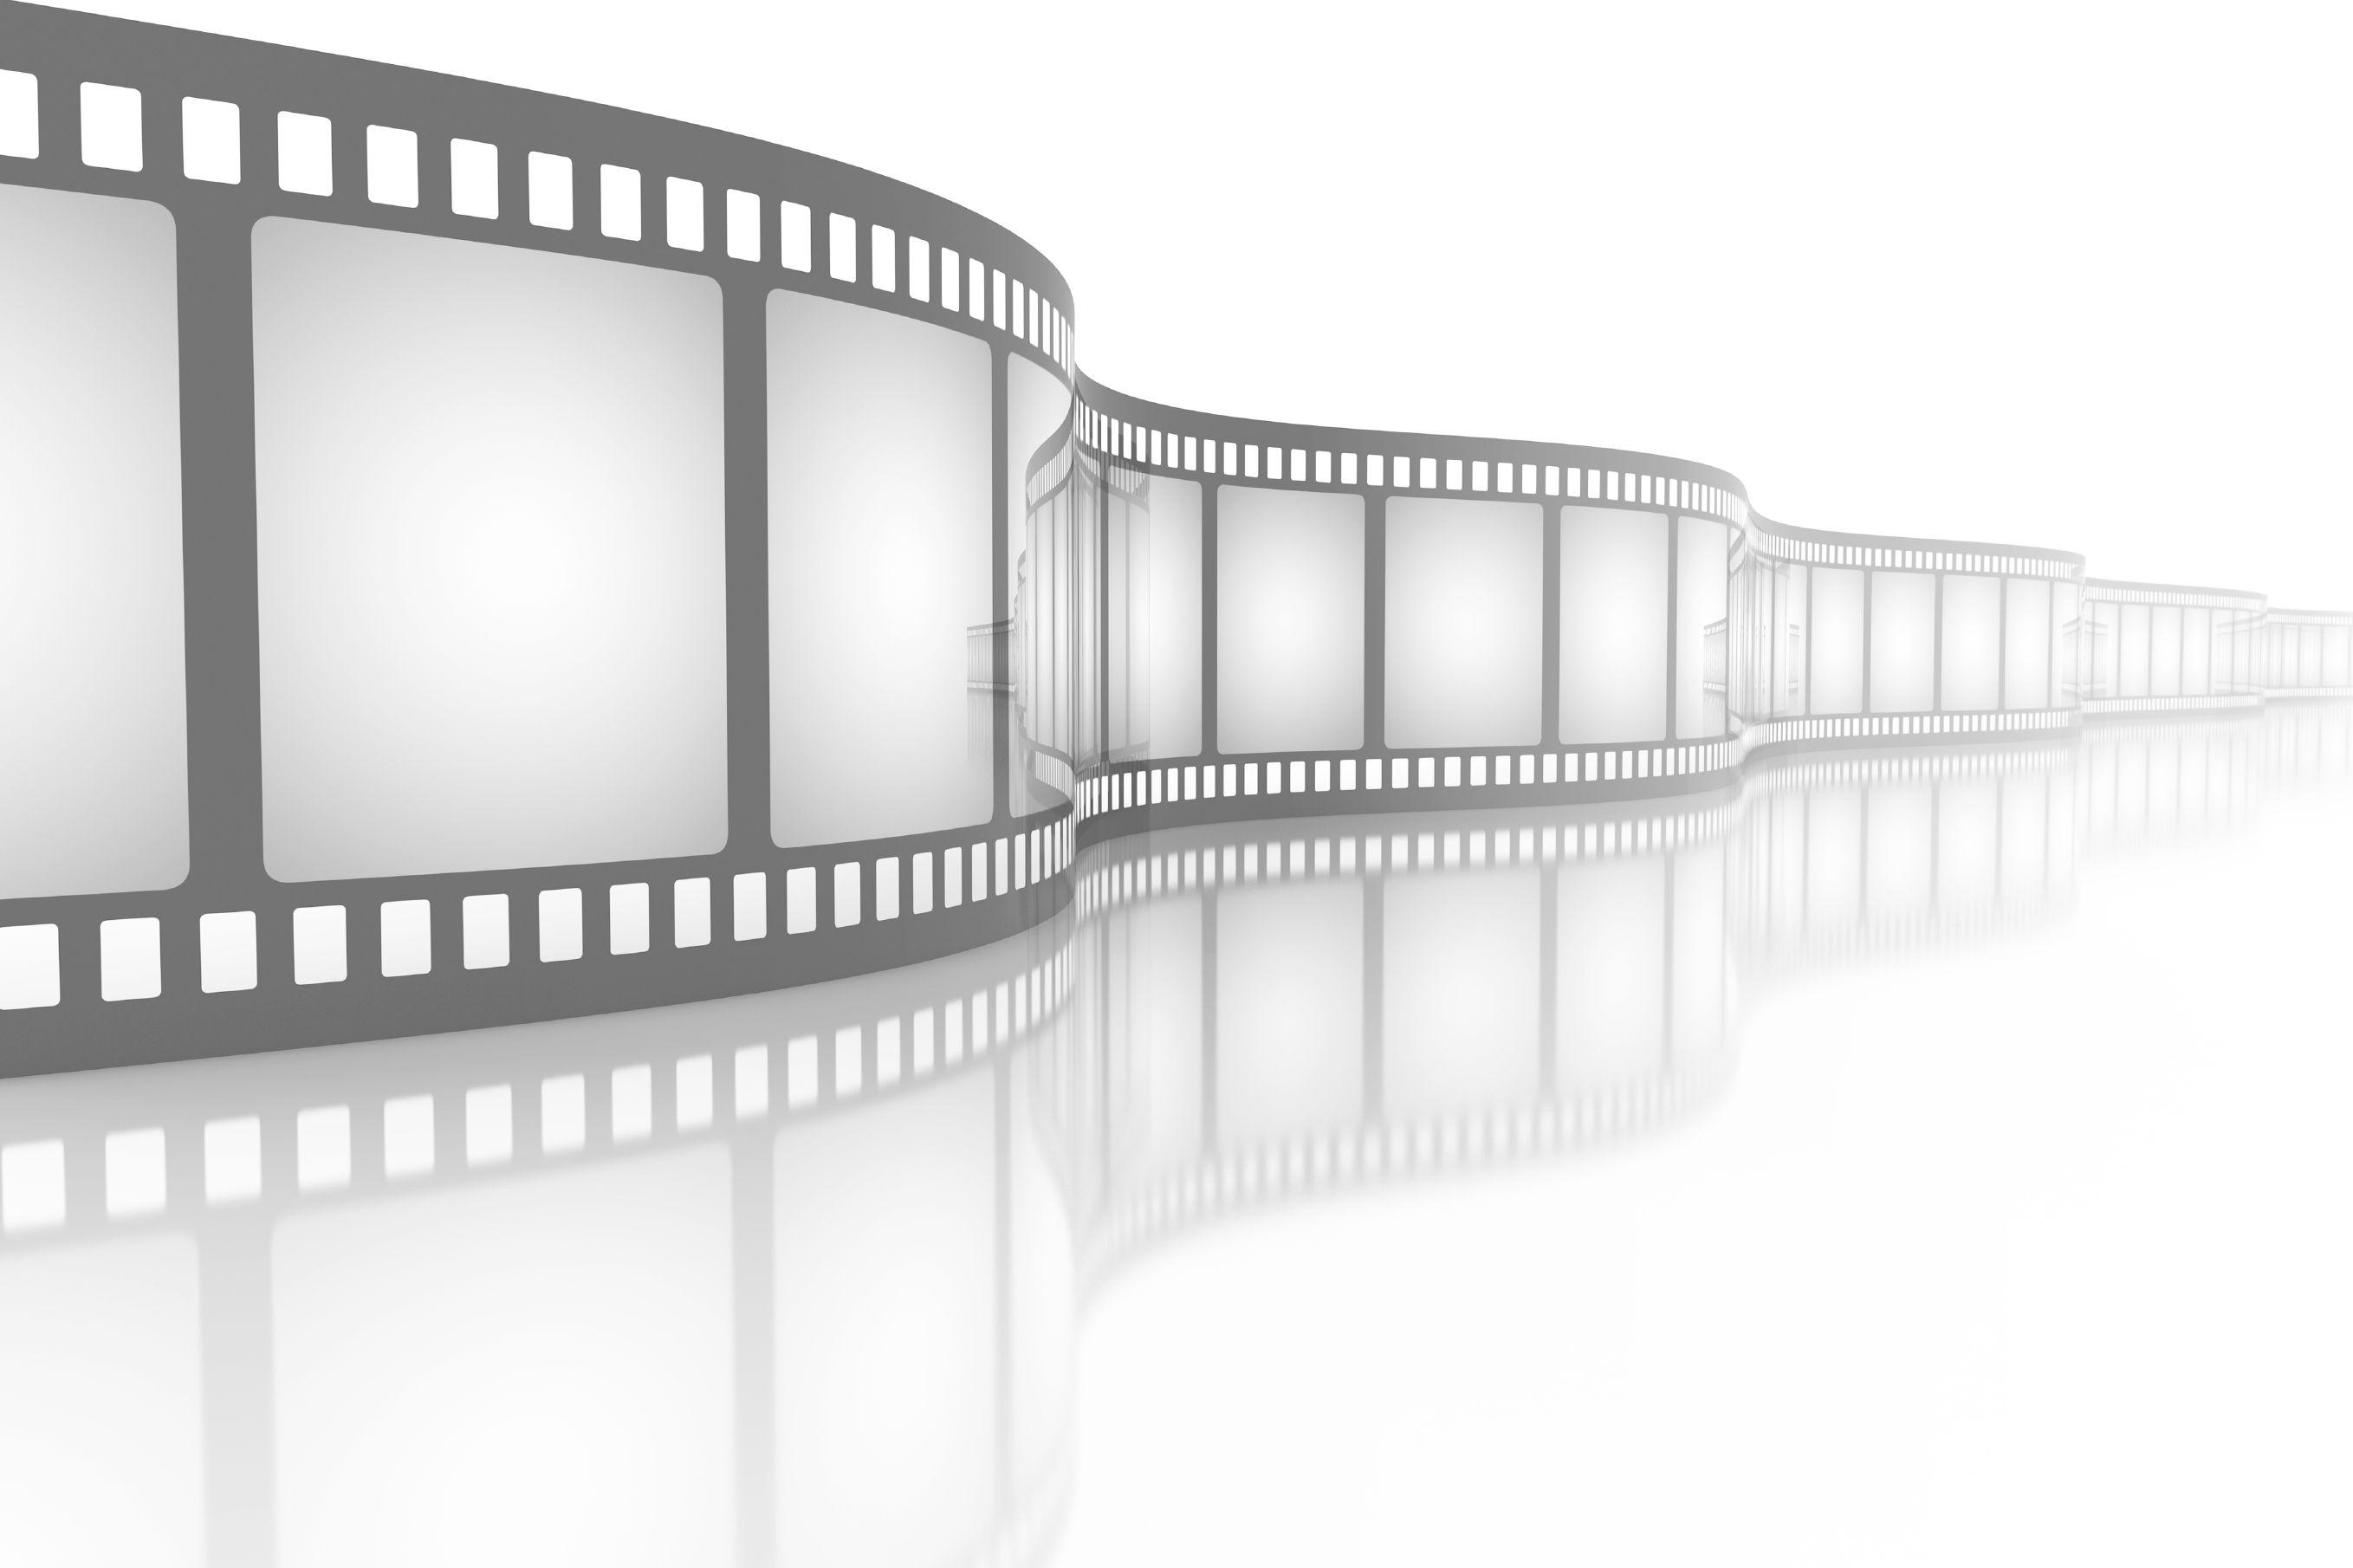 Choosing the right video background. Qumu Enterprise Video